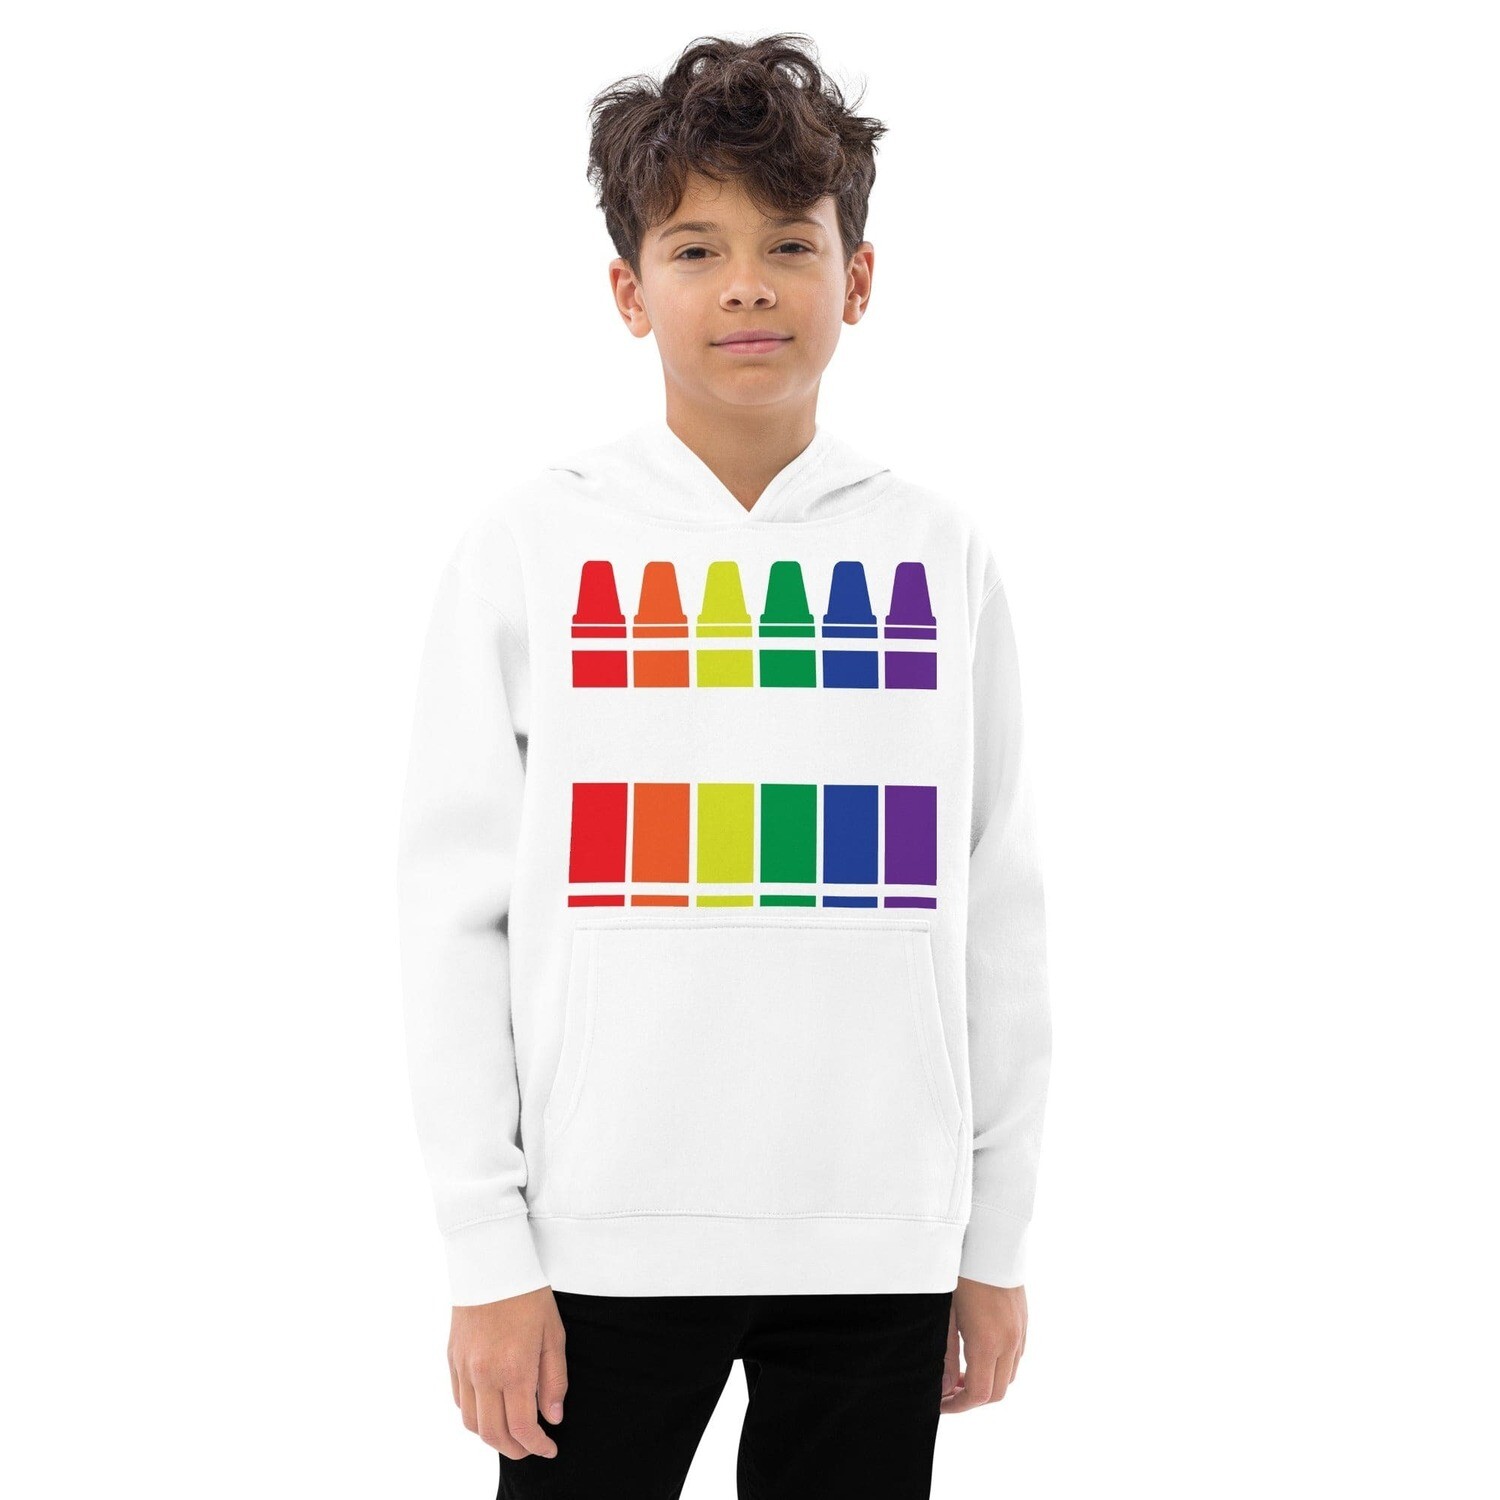 Kids fleece hoodie - Colorful My Name is Print, Kids Clothing, School Outfit